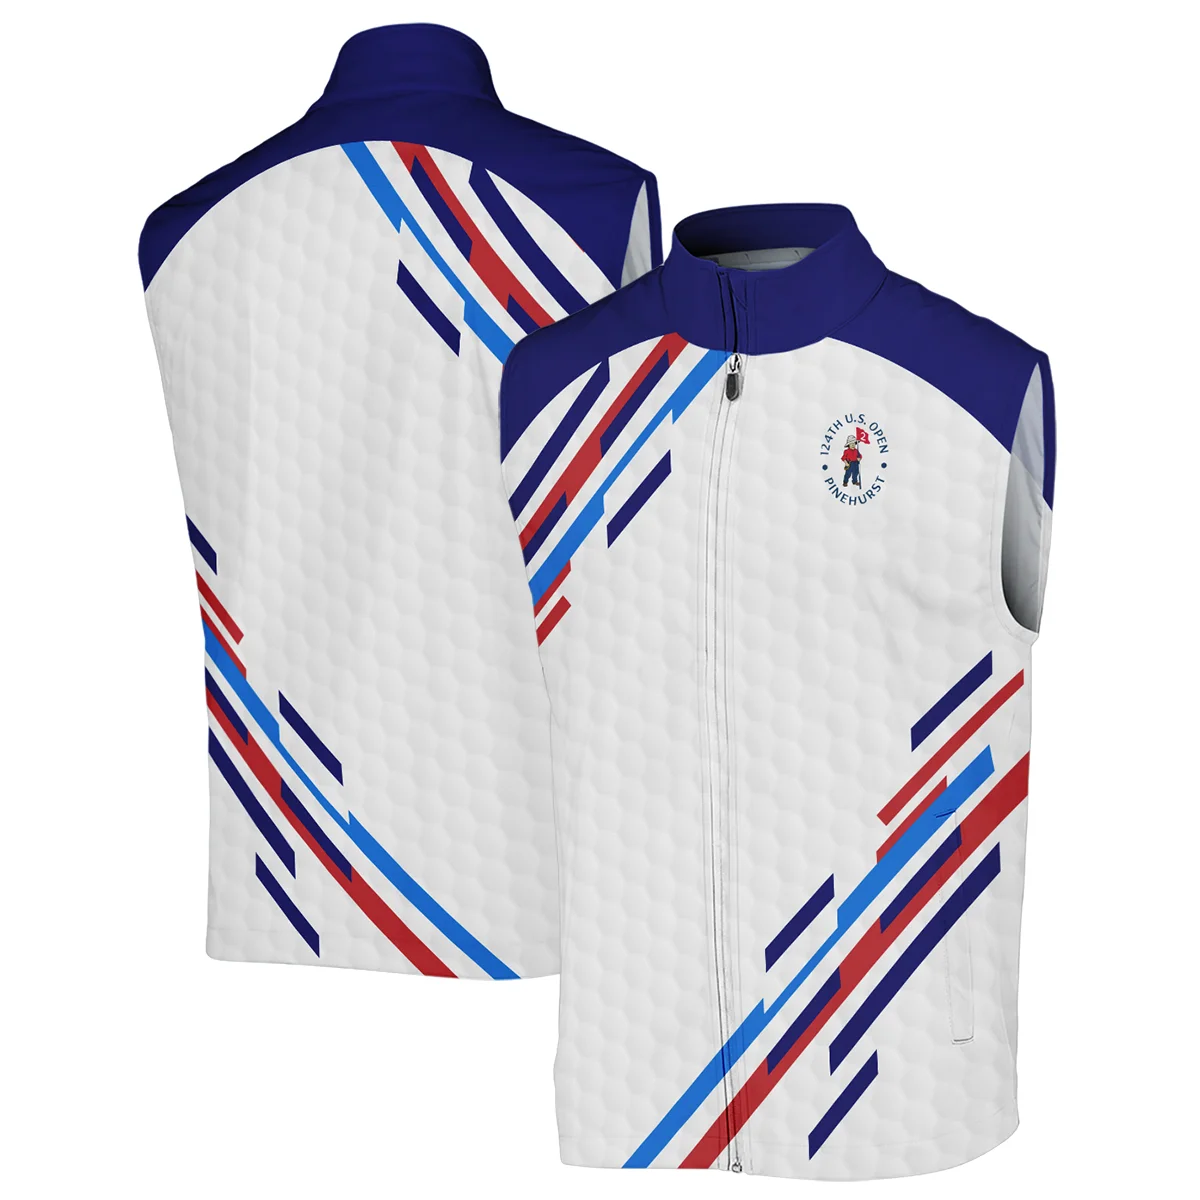 Golf Sport Titleist 124th U.S. Open Pinehurst Sleeveless Jacket Blue Red Golf Pattern White All Over Print Sleeveless Jacket